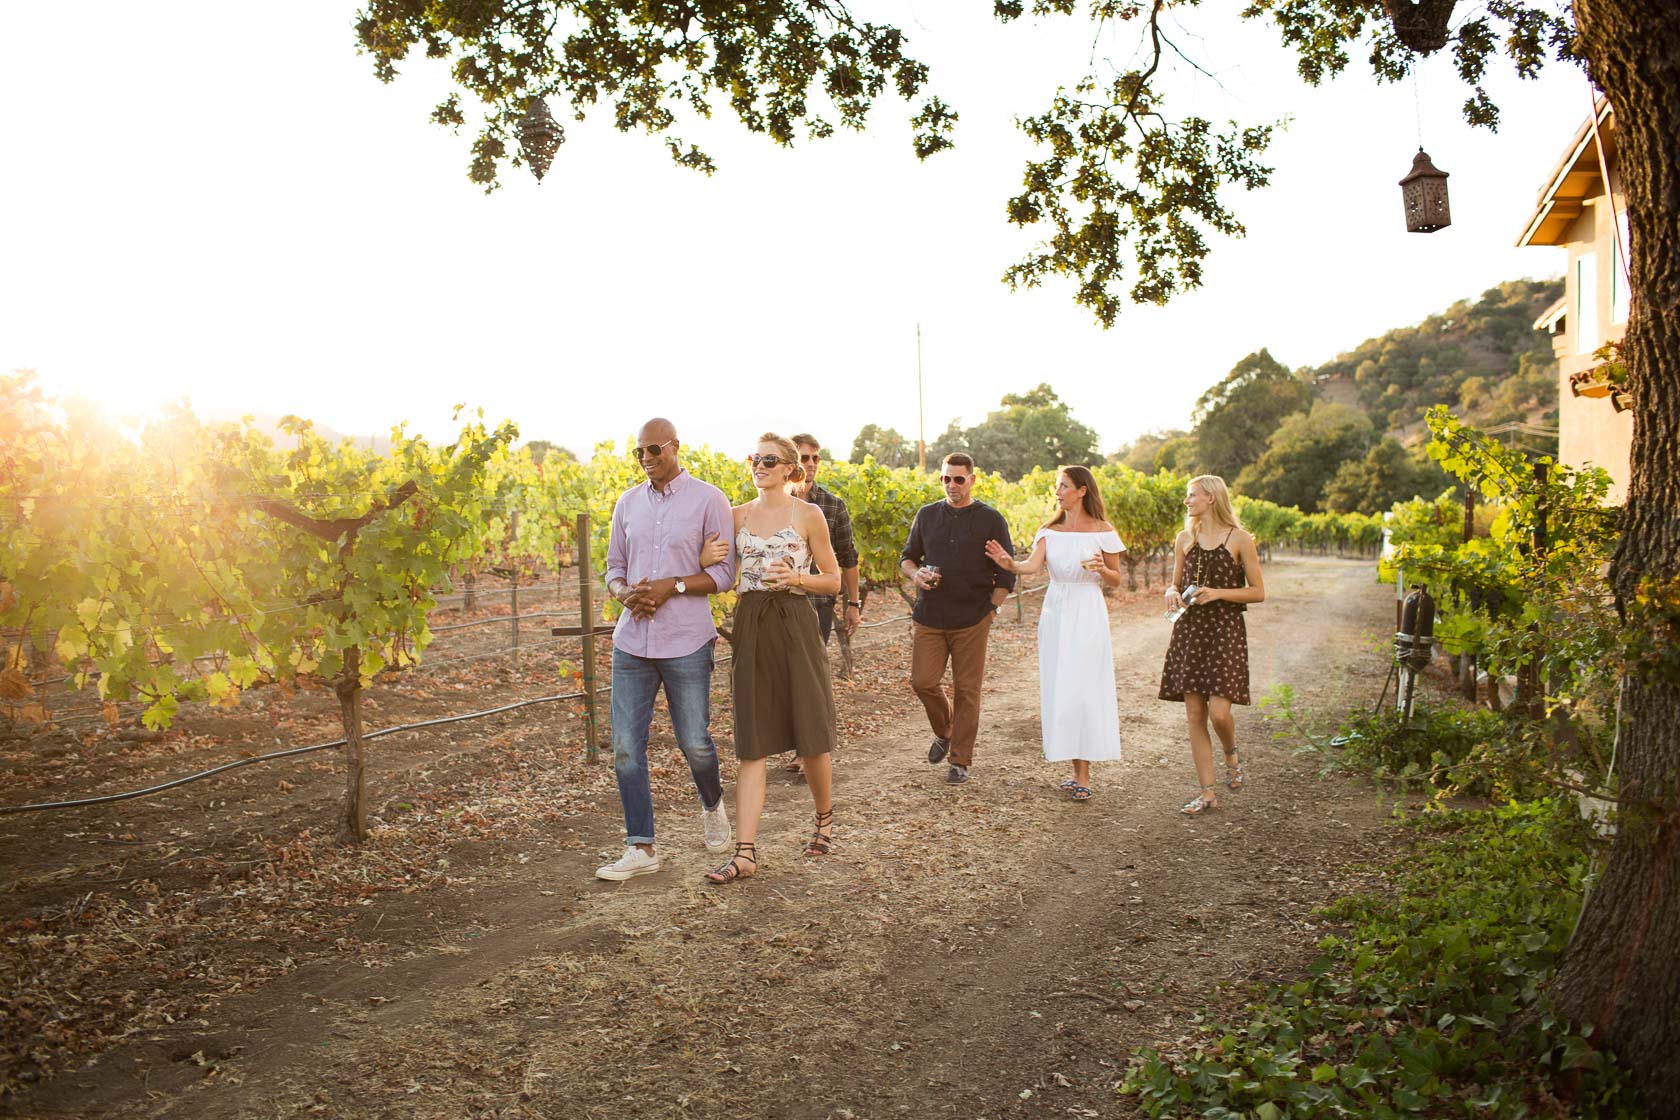 A group of people walking through the Napa vineyard